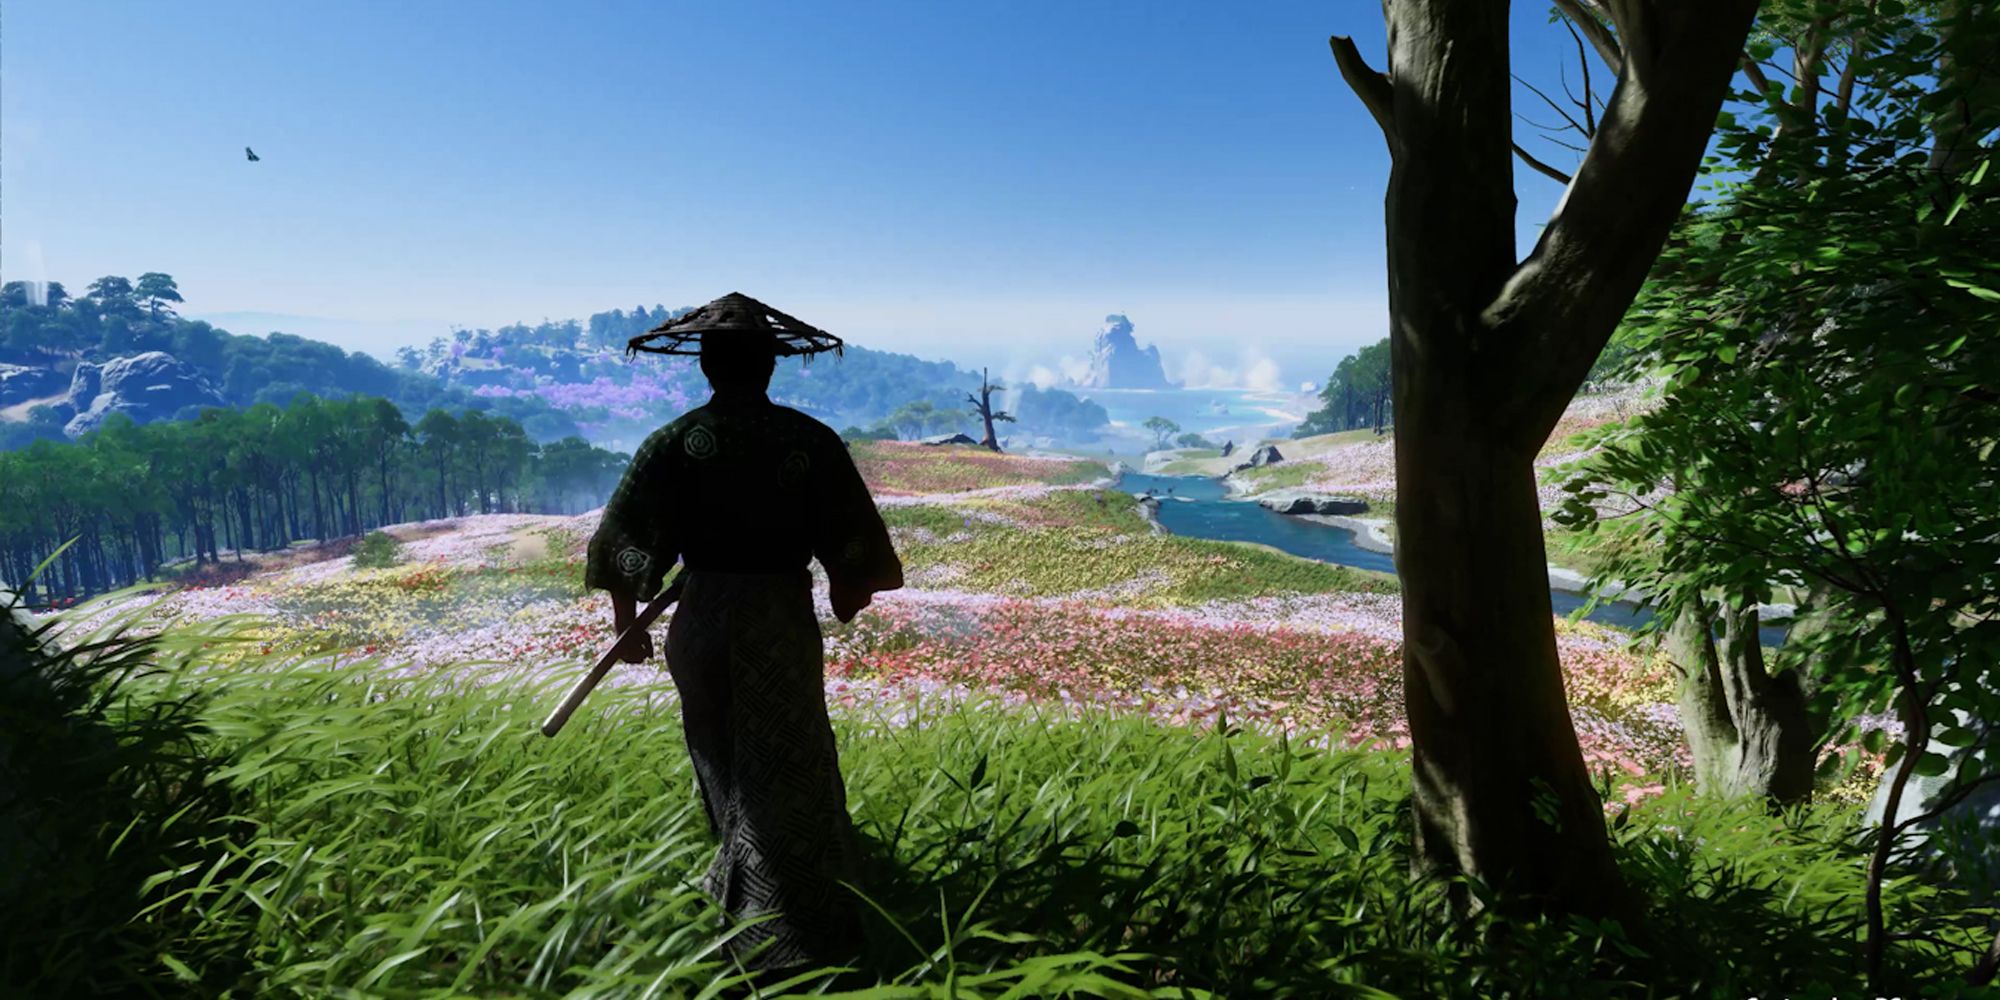 Ghost of Tsushima PC - Jin Sakai overlooking a field